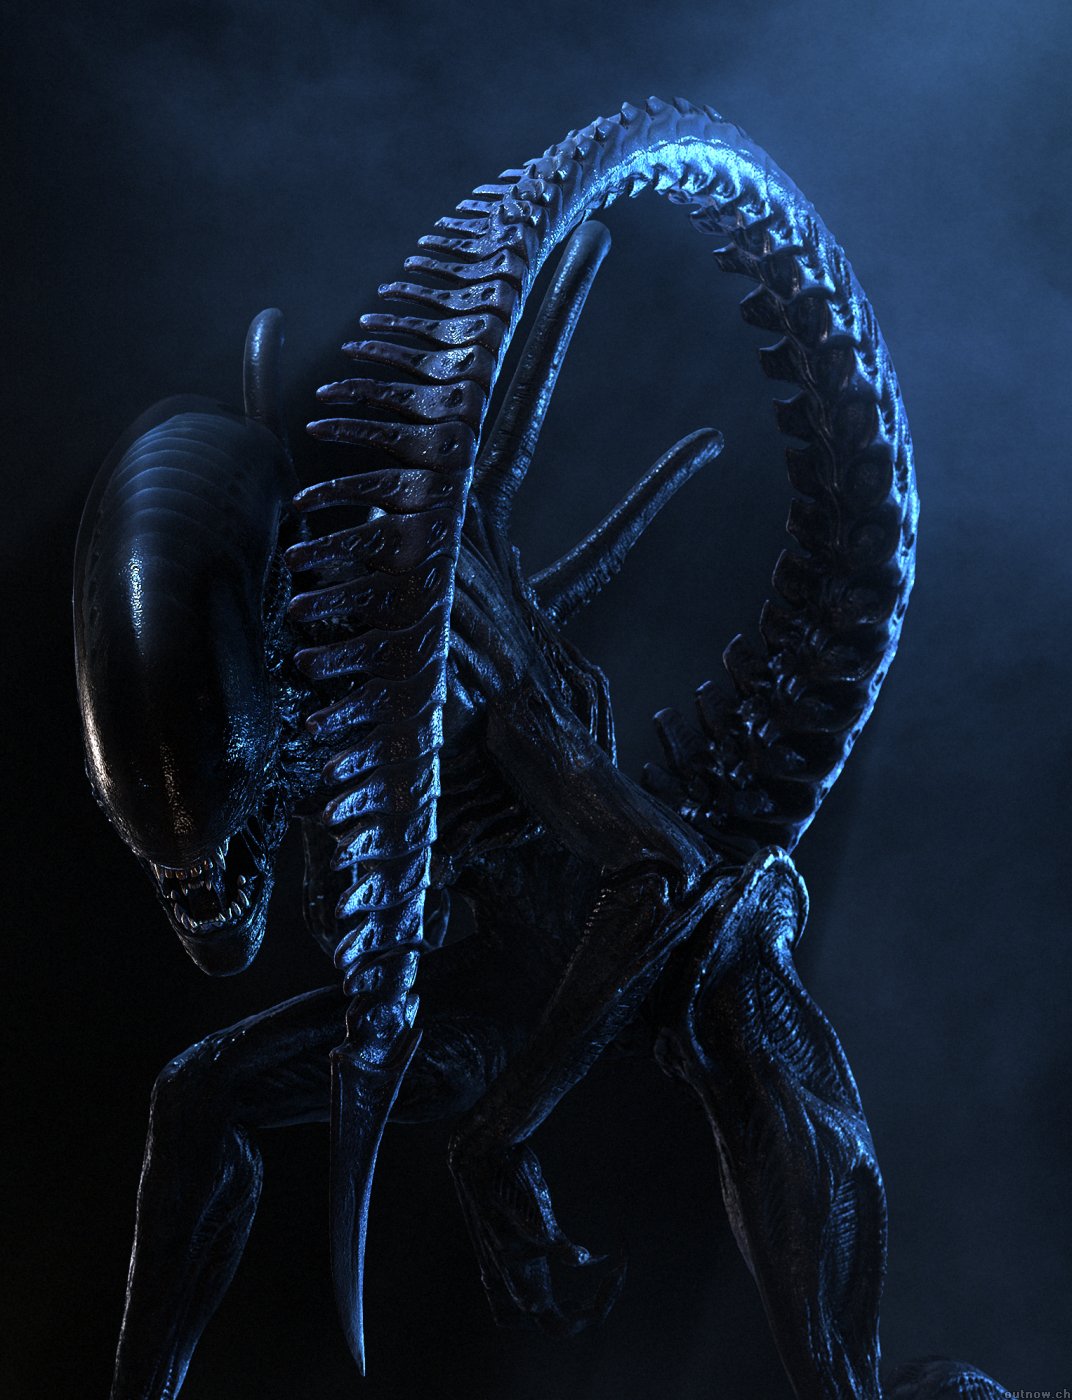 AVP: Alien Vs. Predator #8